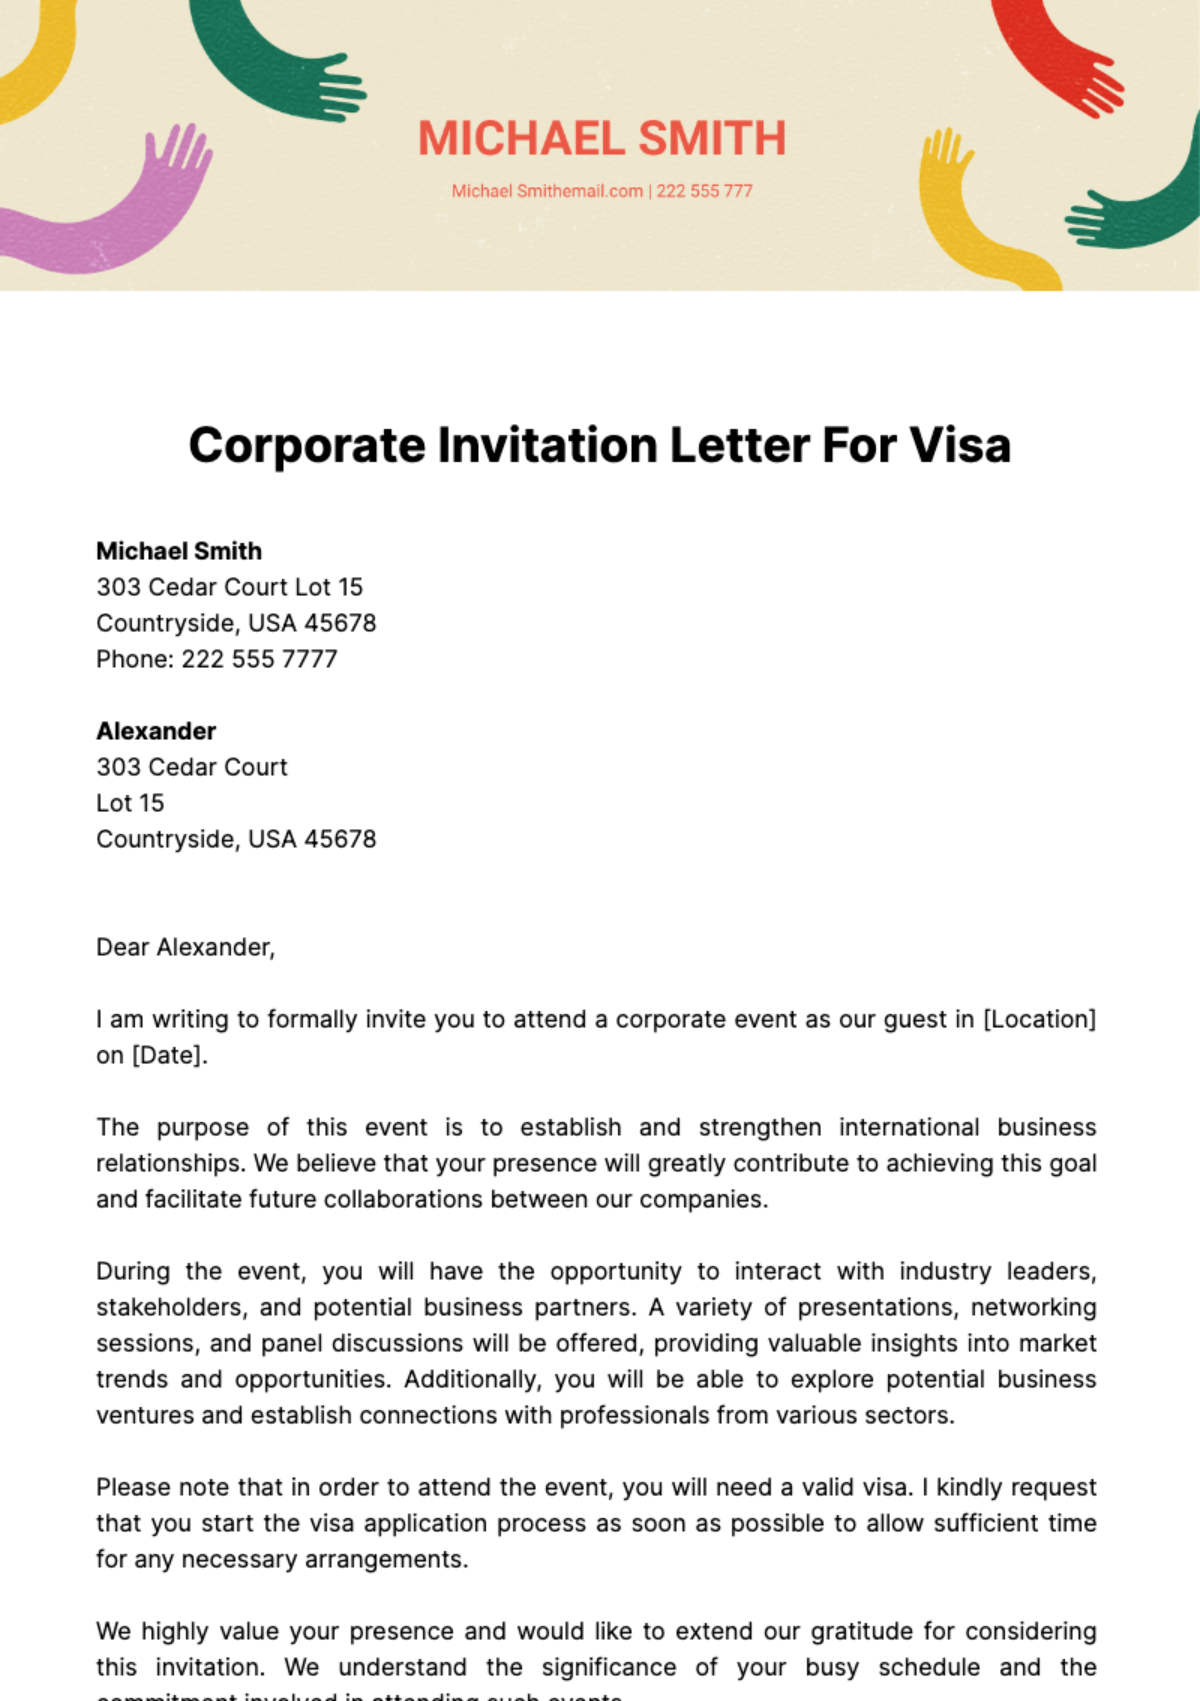 Corporate Invitation Letter For Visa Template